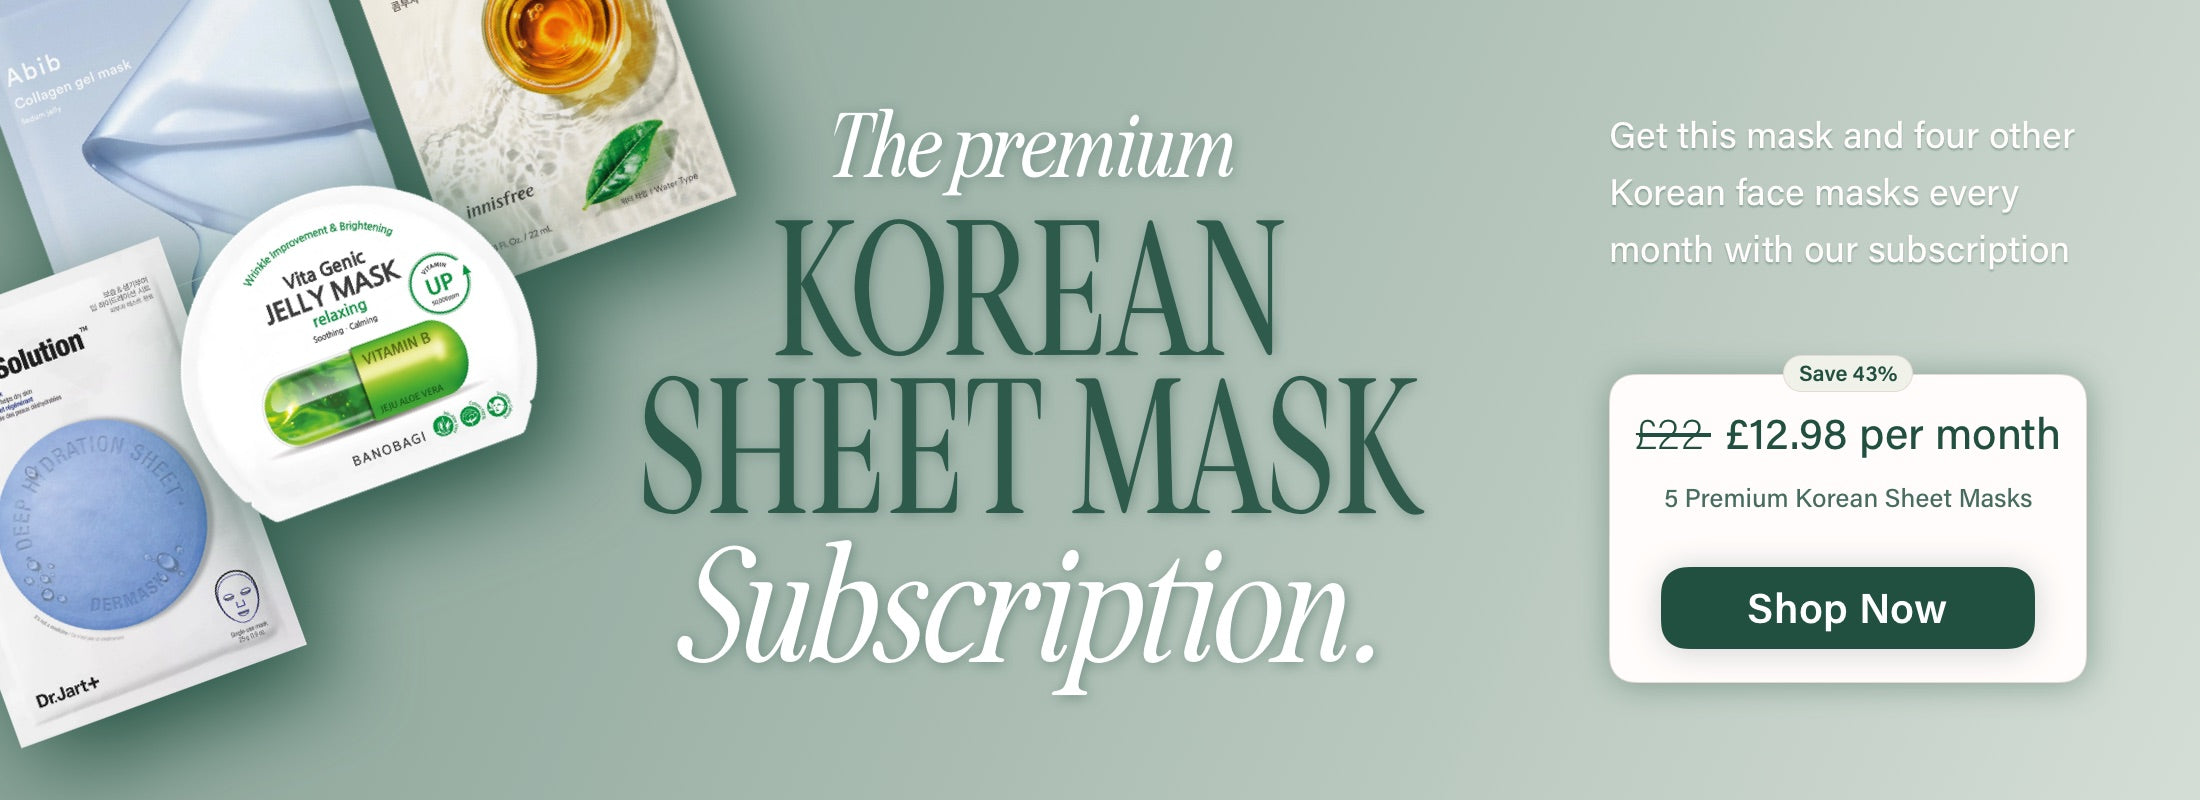 Korean Face Mask Subscription